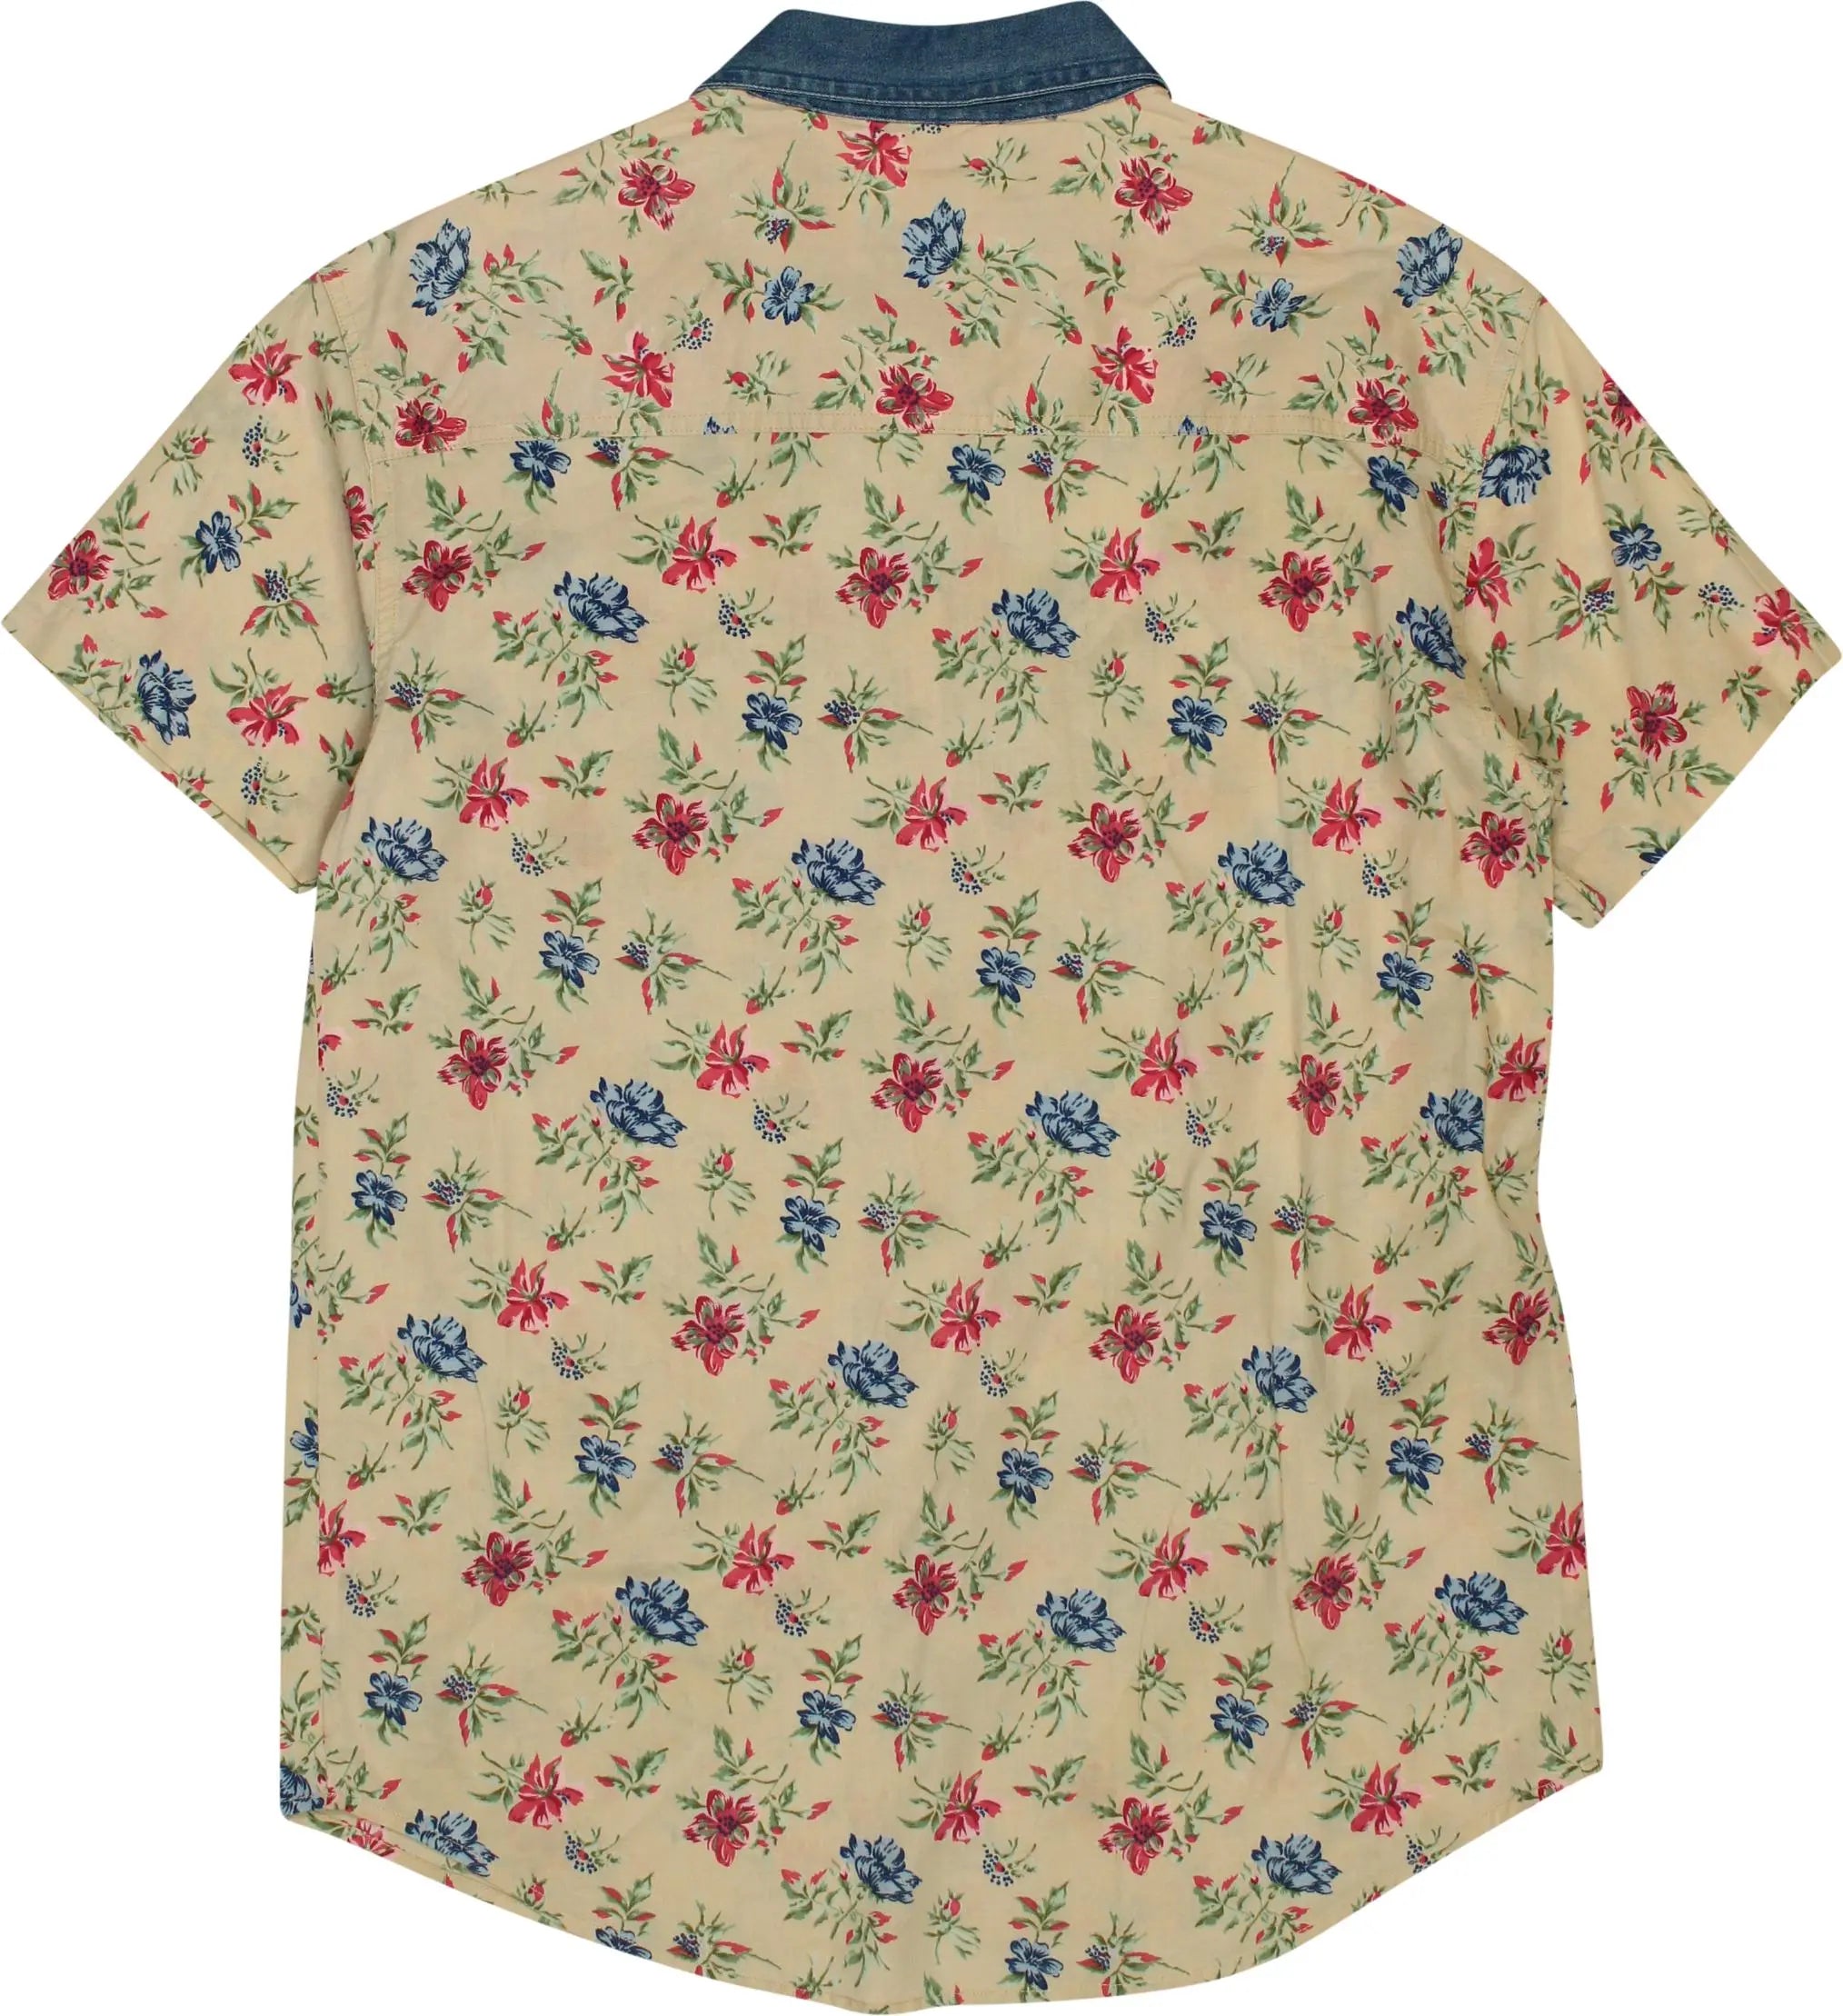 Northwest Blue - Floral Shirt- ThriftTale.com - Vintage and second handclothing